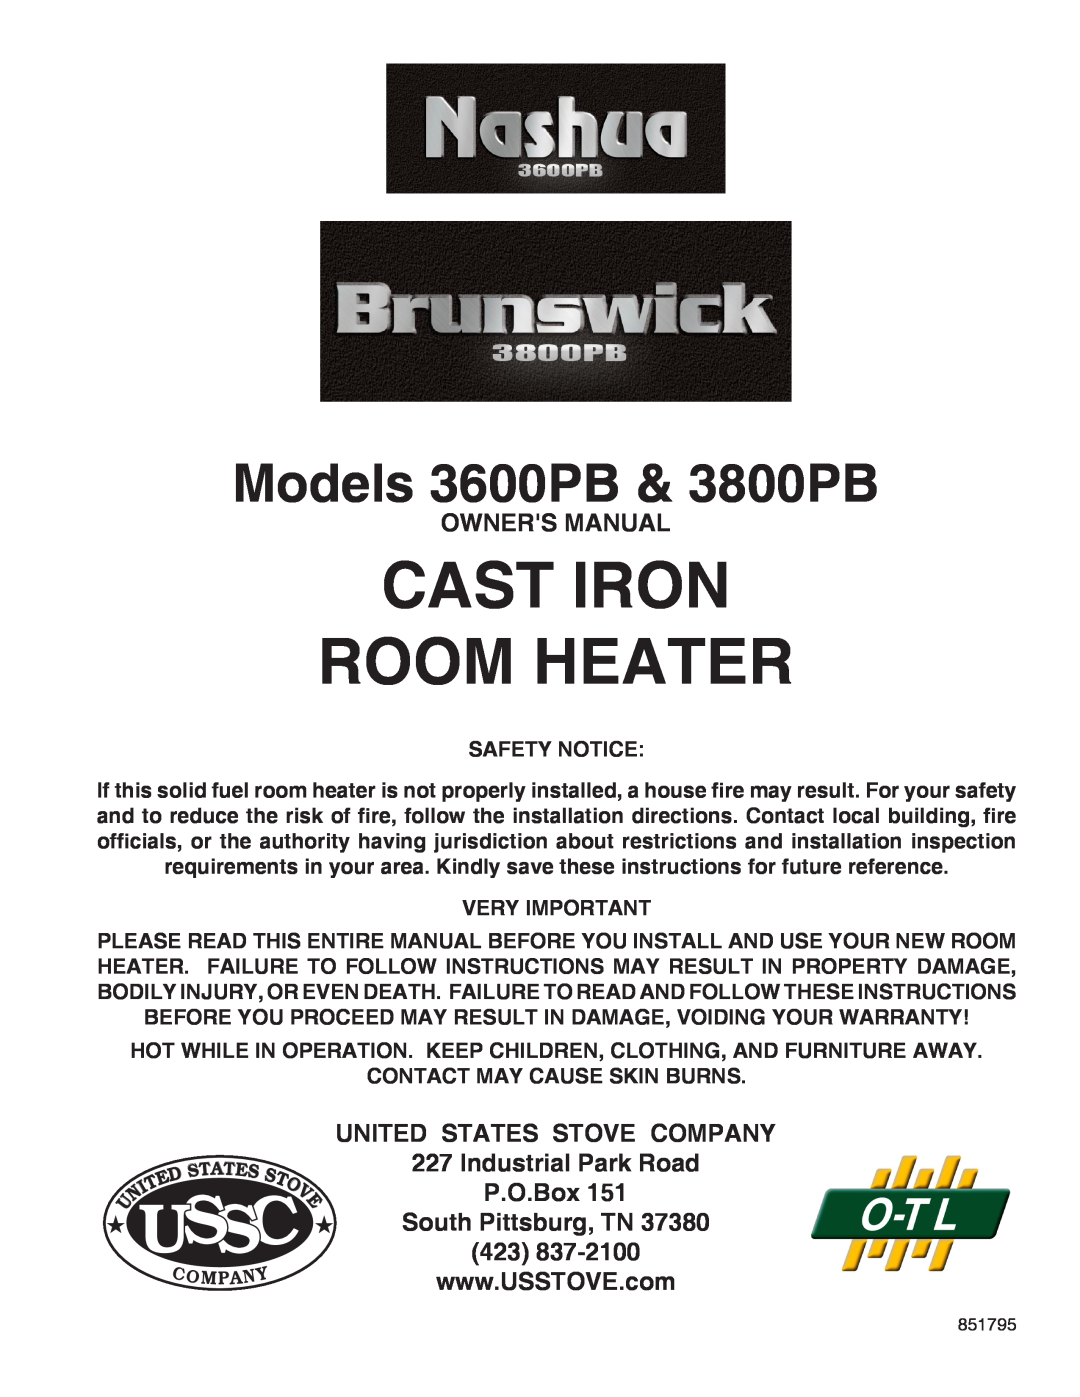 United States Stove owner manual Cast Iron Room Heater, Ussc, Models 3600PB & 3800PB, United States Stove Company 